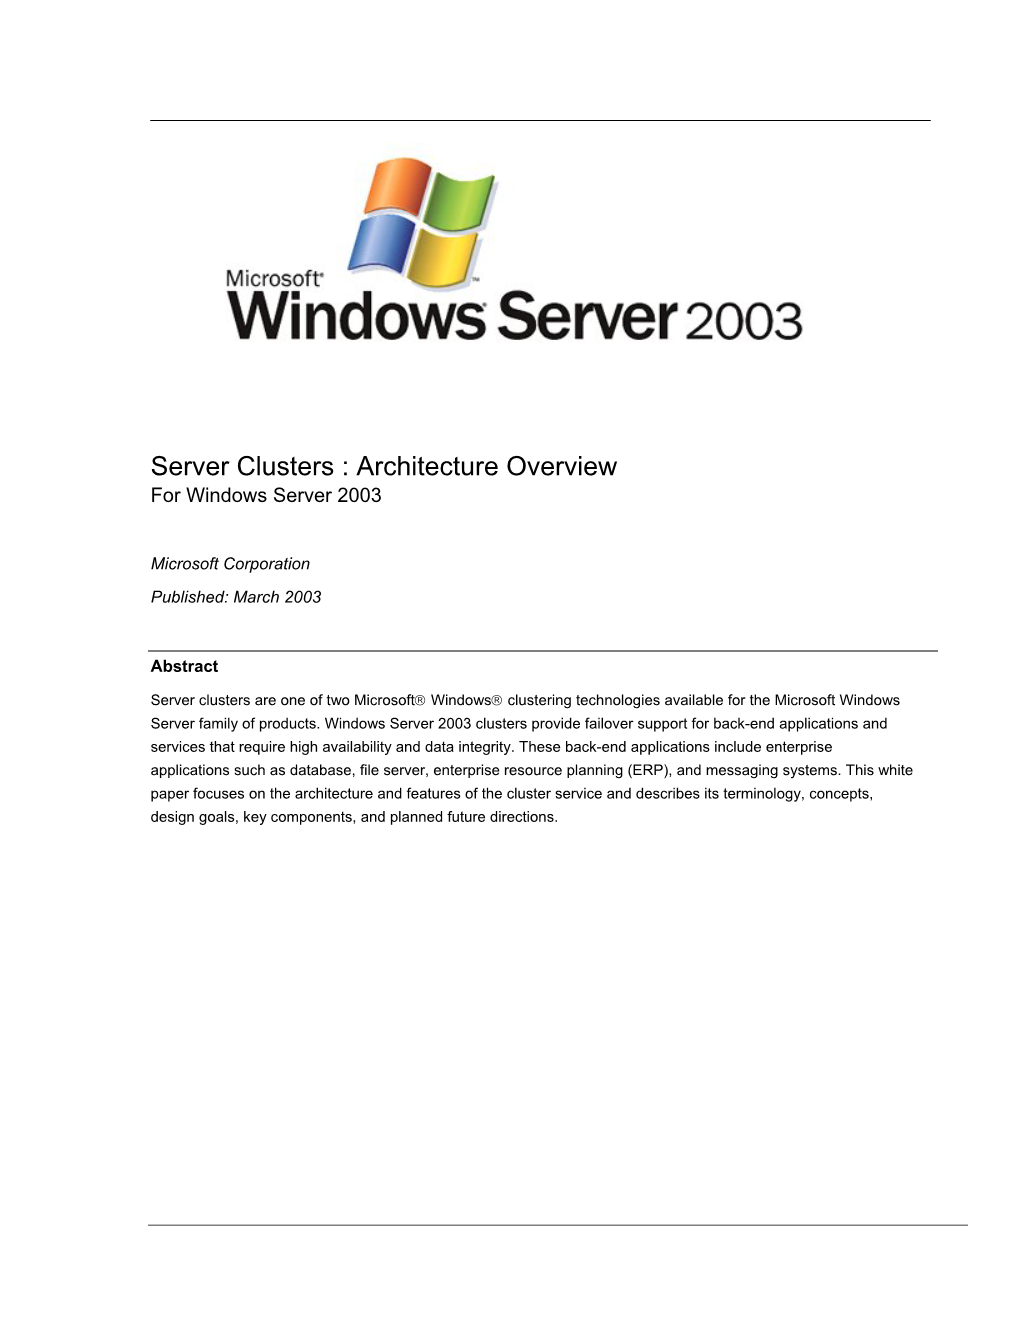 Microsoft Windows Server 2003. Server Clusters: Architecture